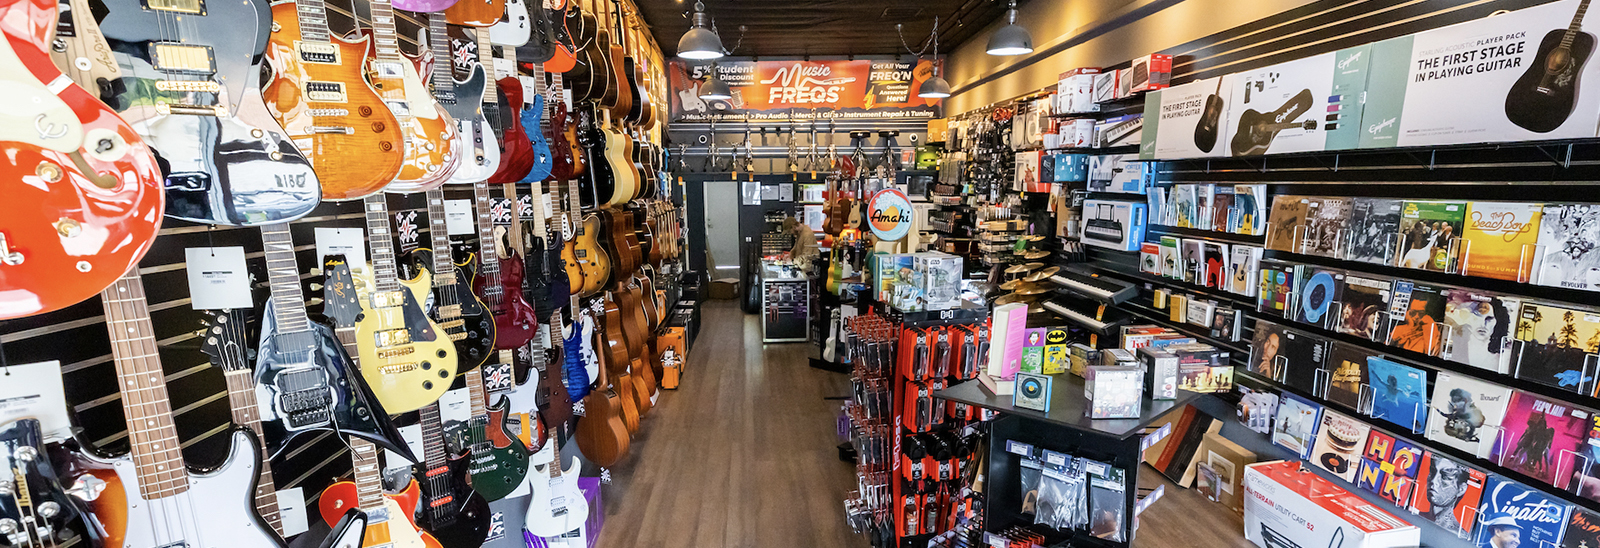 Music Freqs Store